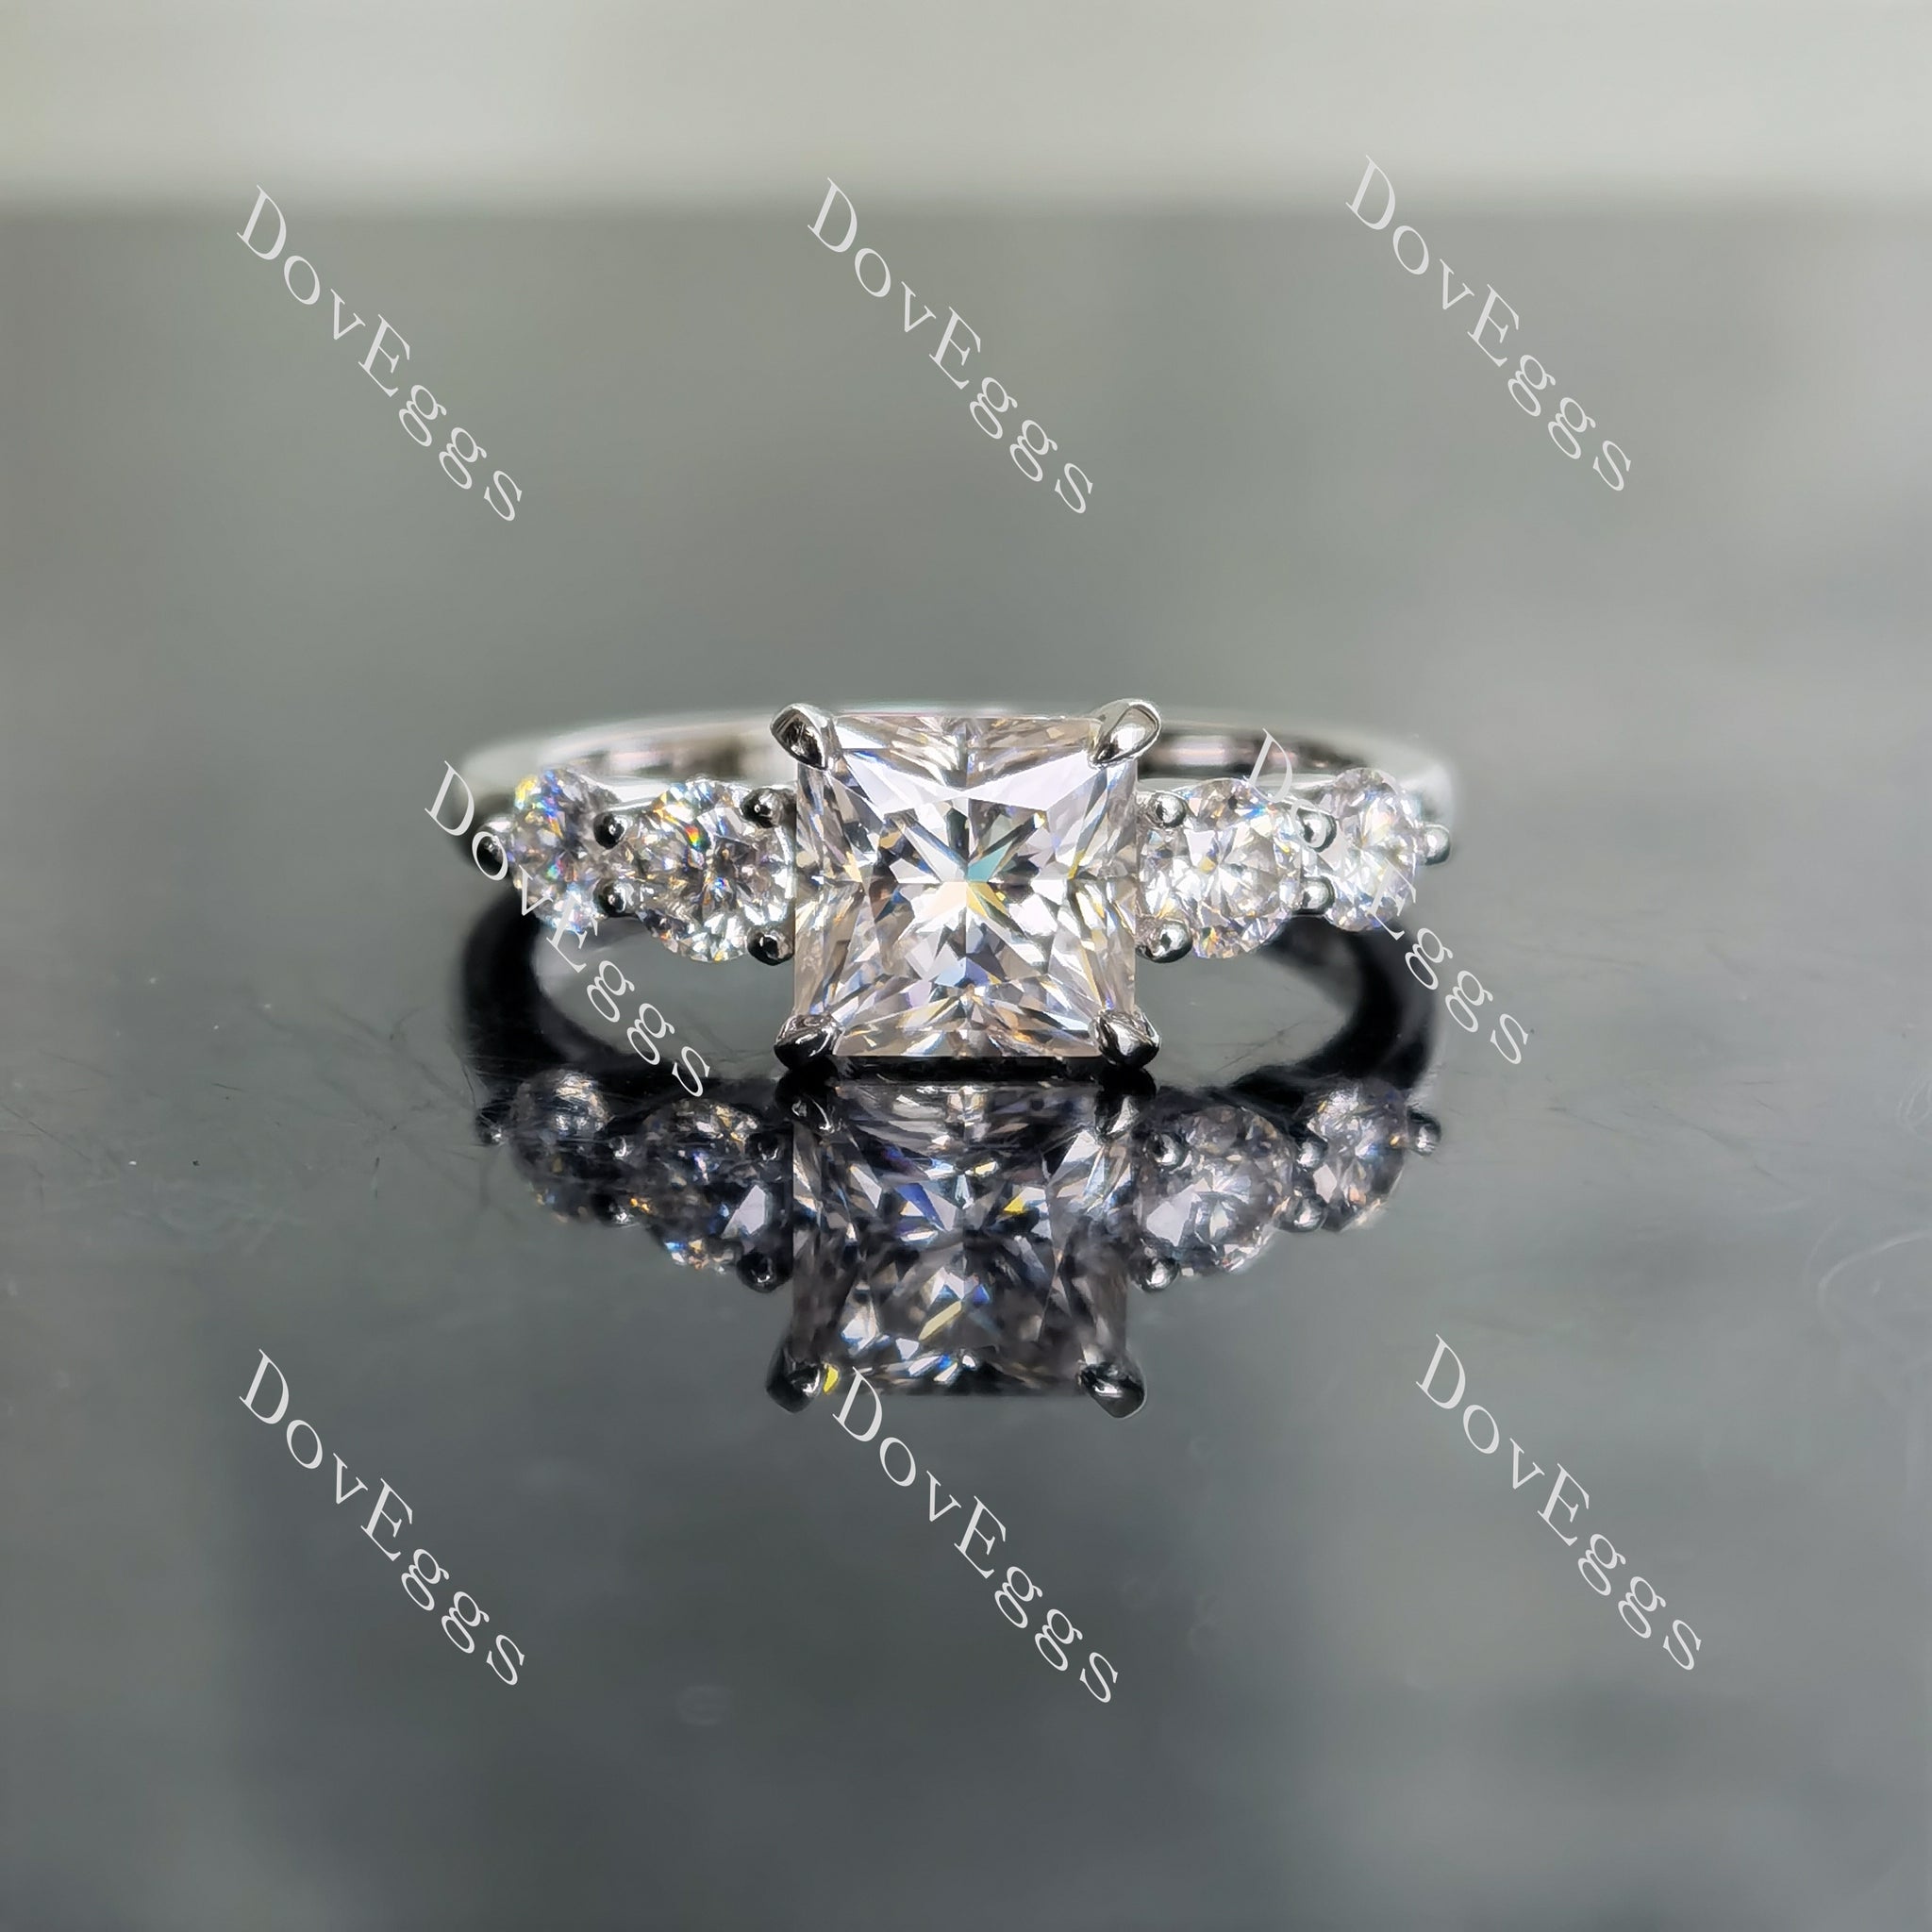 DovEggs princess side stones moissanite engagement ring